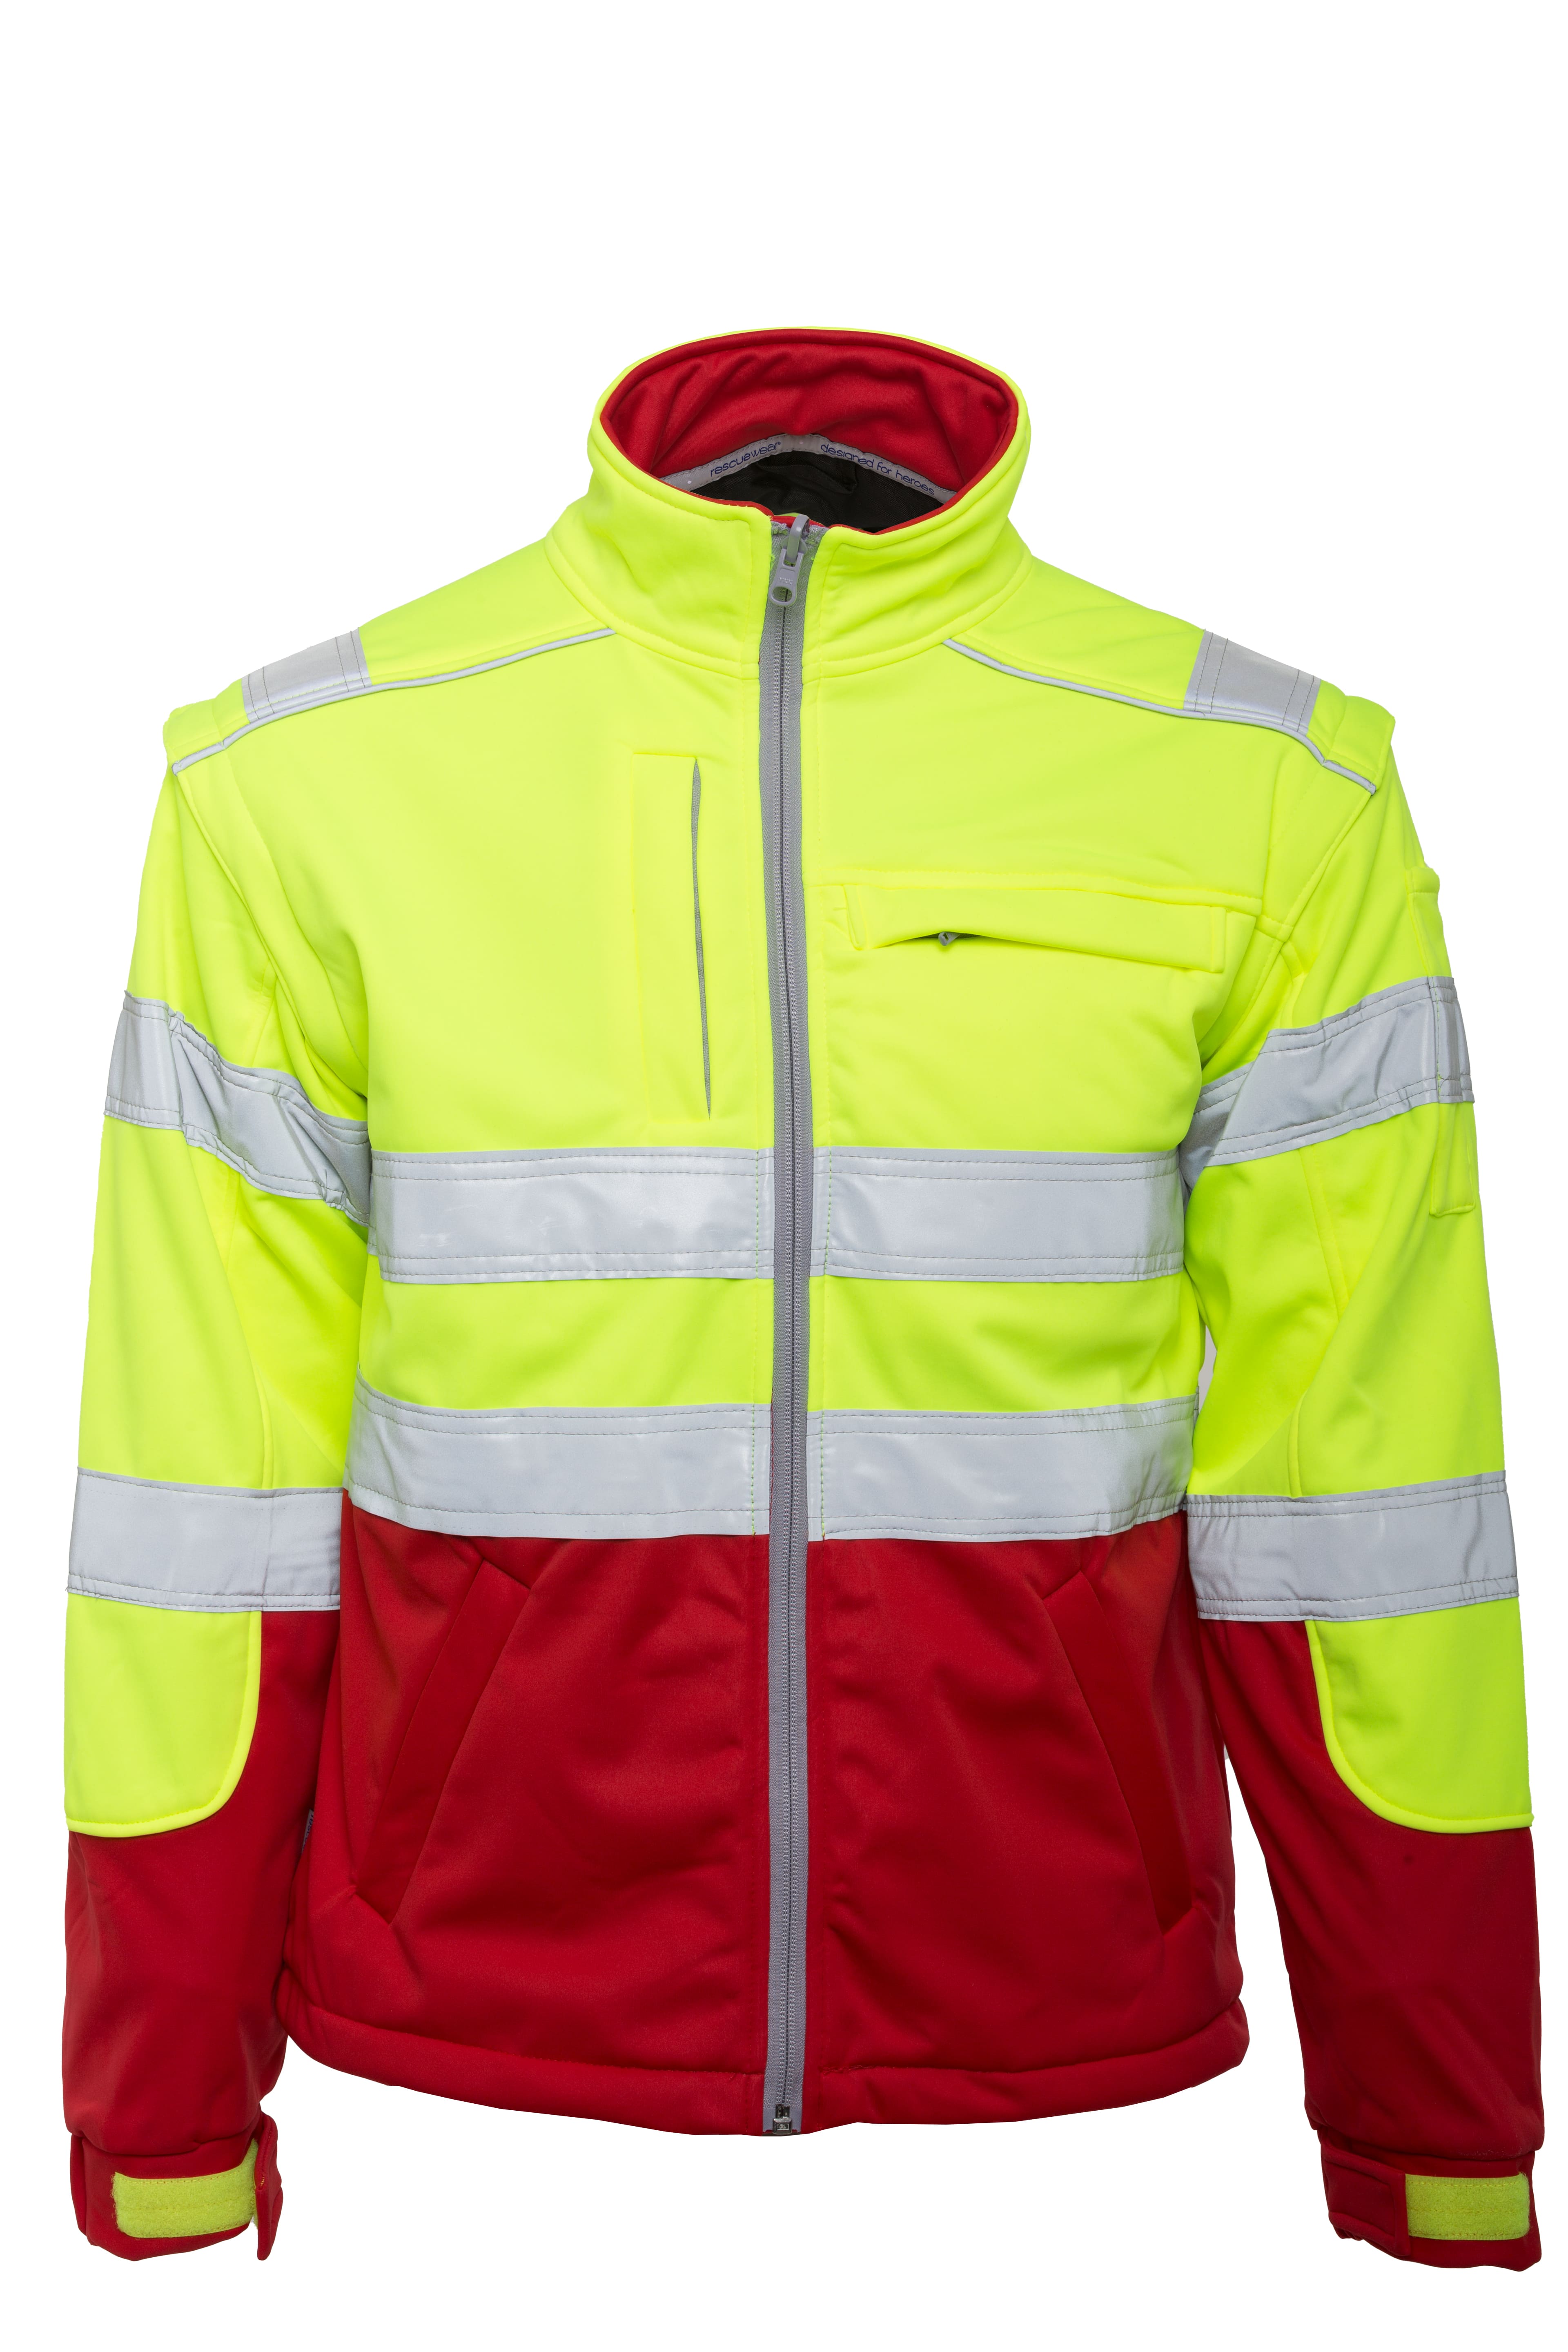 Rescuewear Softshelljacke 33751 HiVis Klasse 3 Rot / Neon Gelb